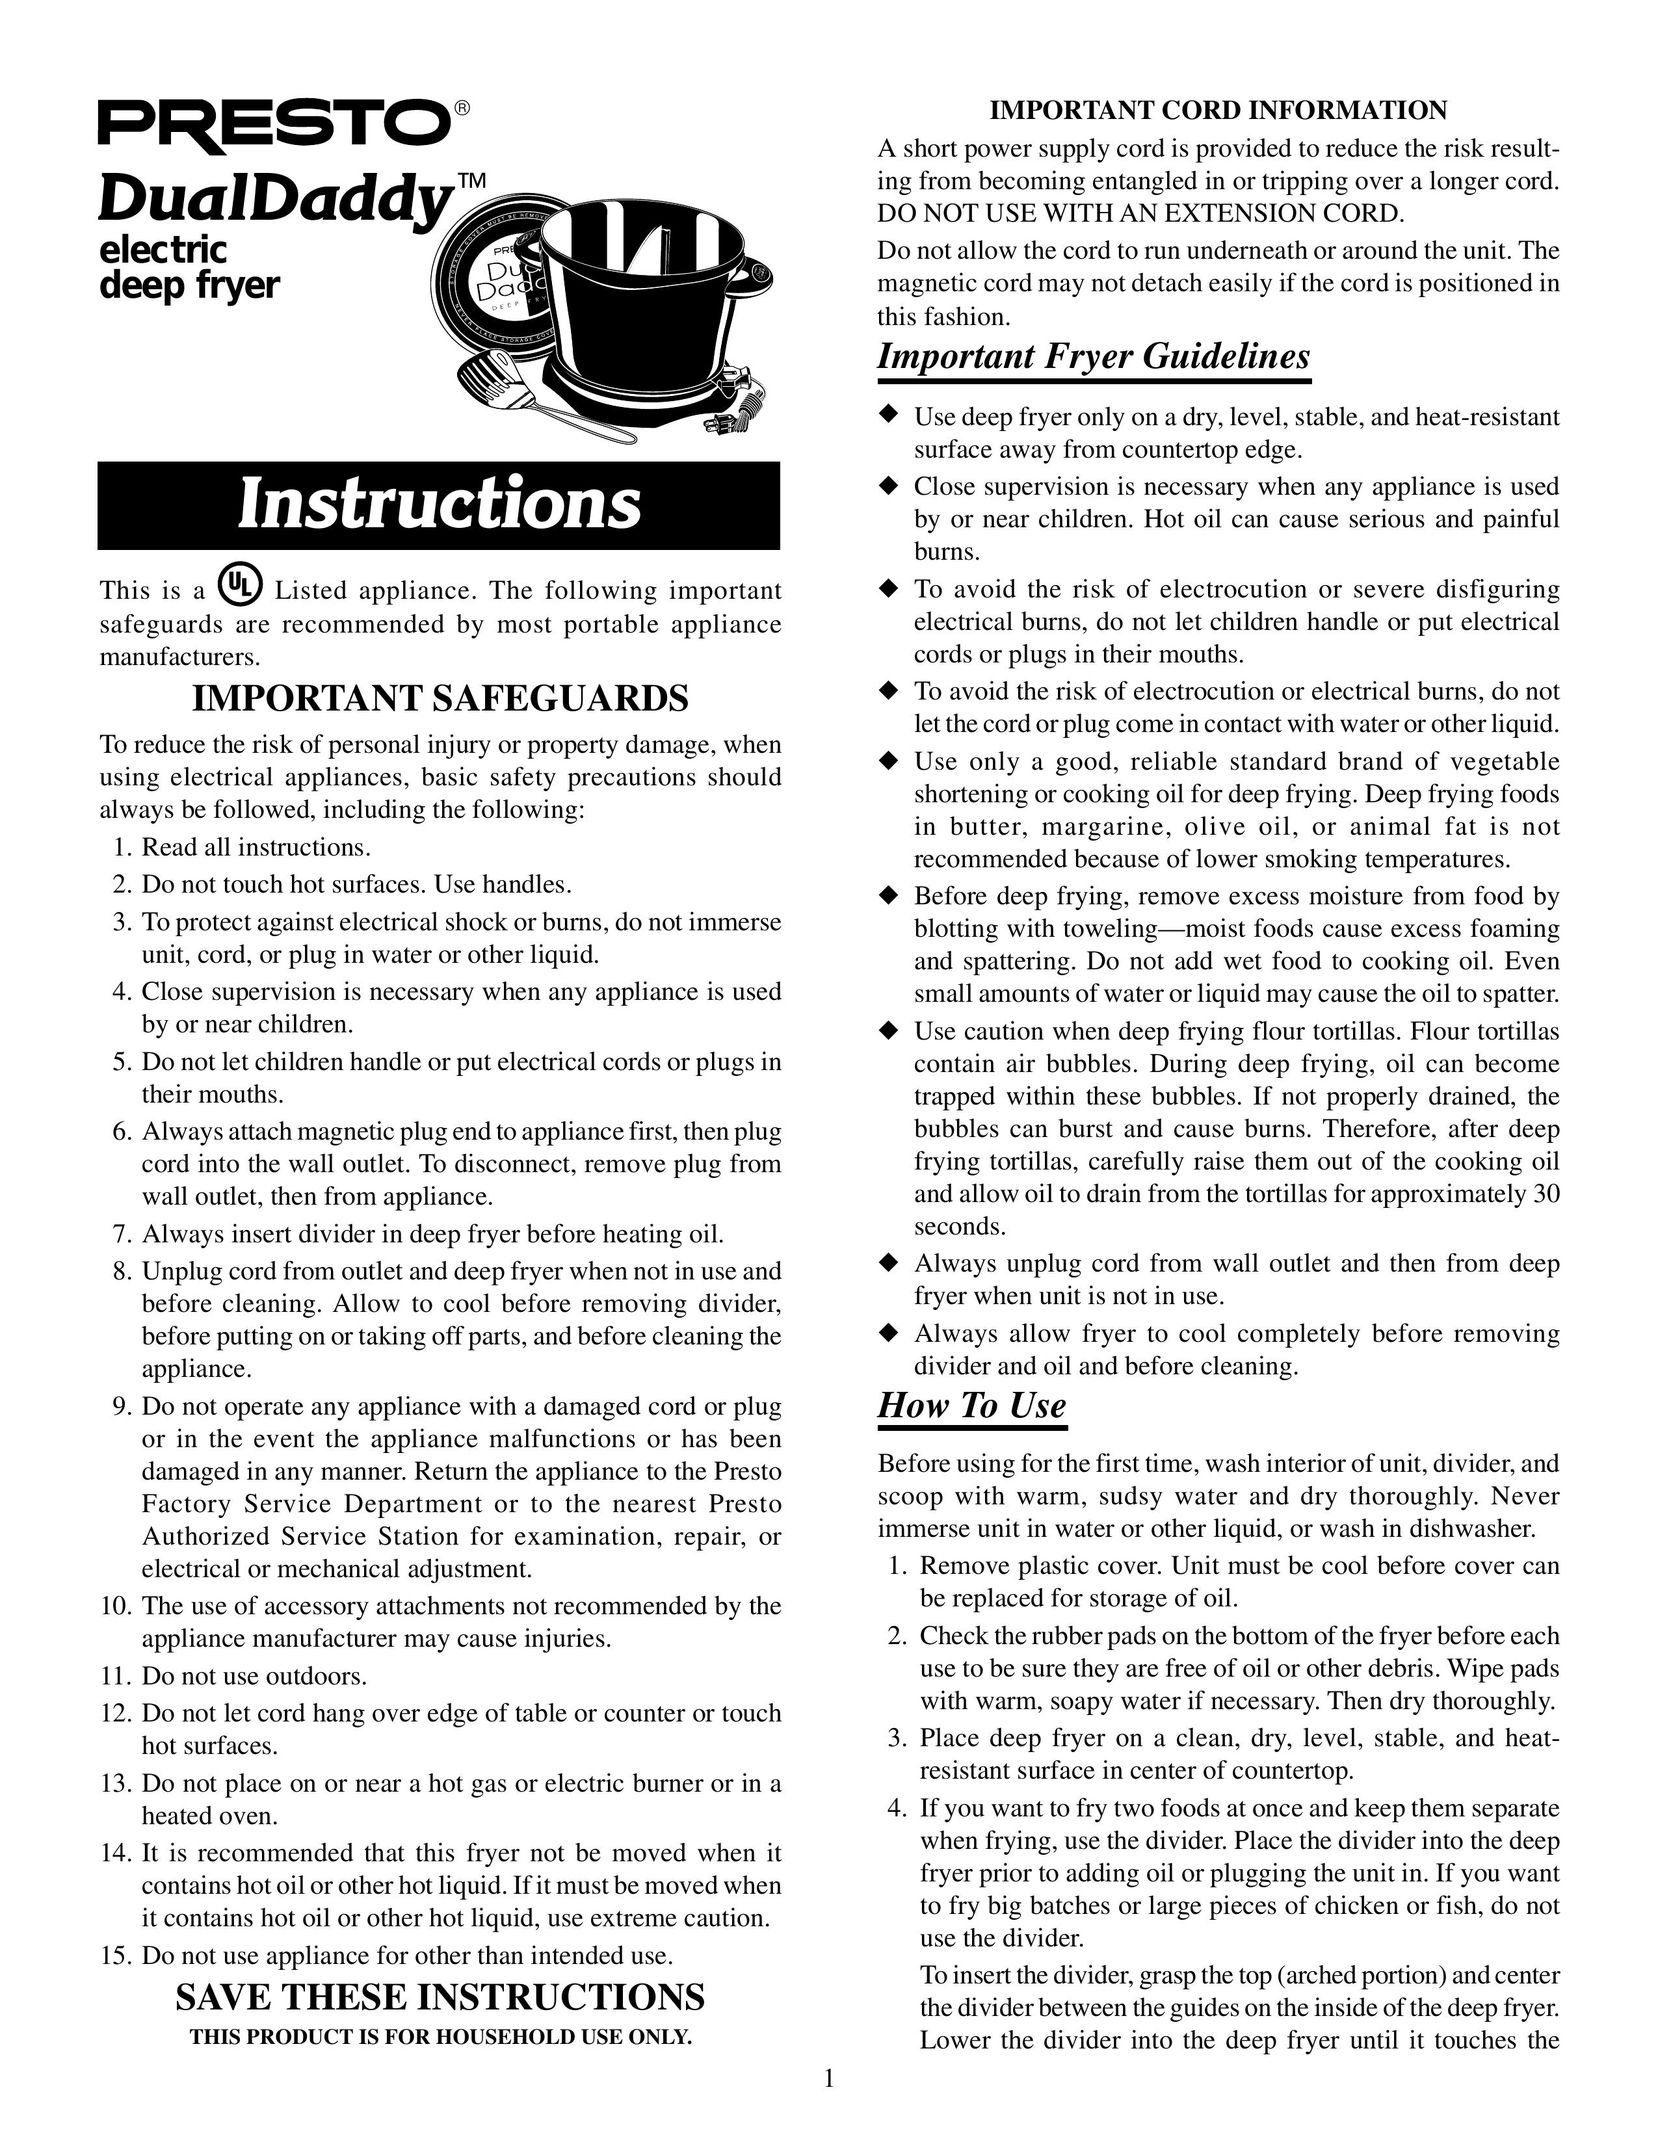 Presto electric deep fryer Fryer User Manual